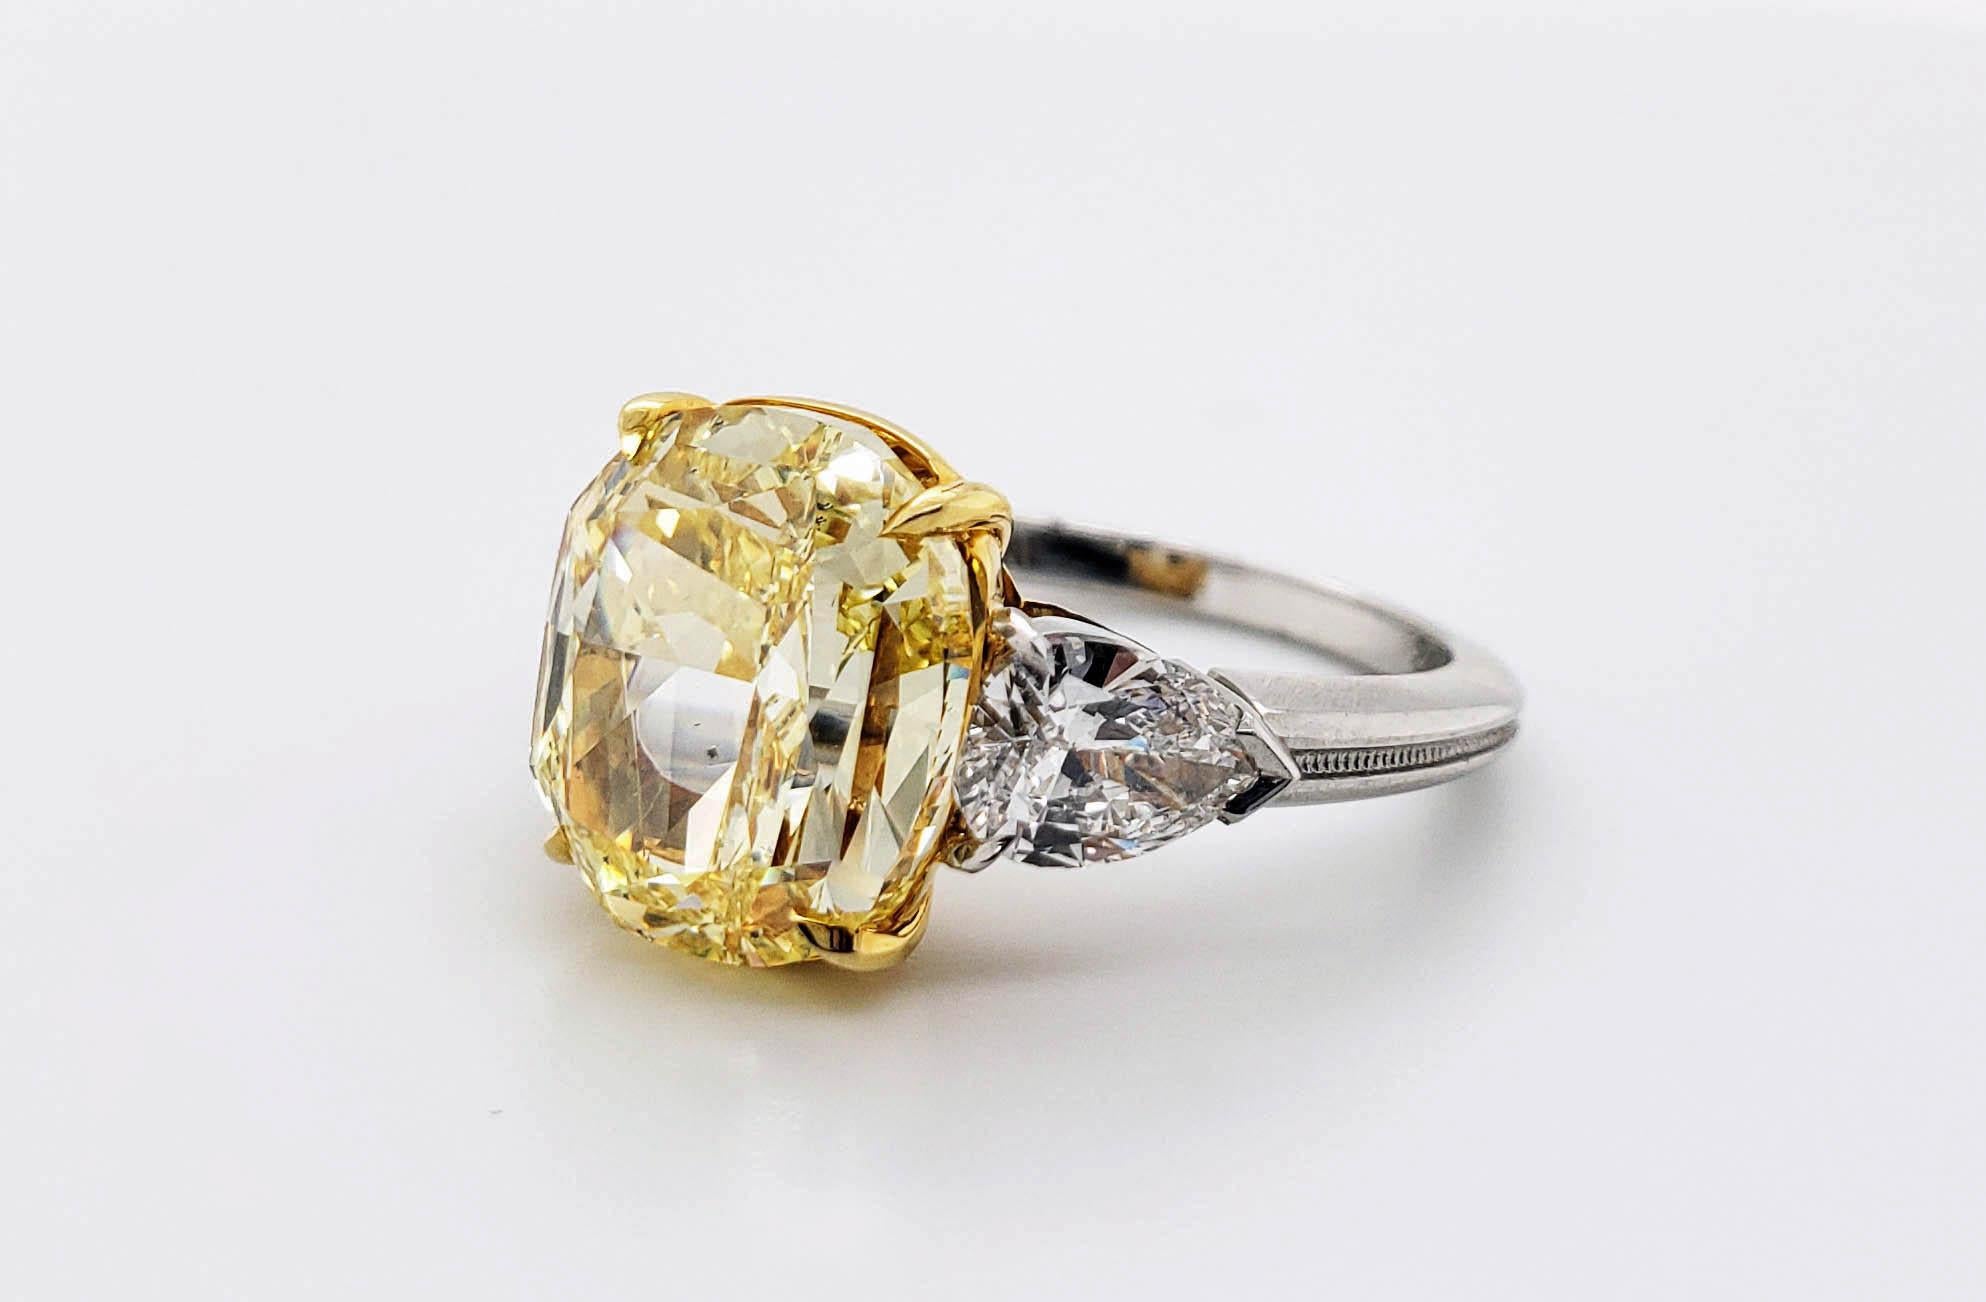 Scarselli 5.68 Carat Fancy Intense Yellow Cushion Cut Diamond Ring in Platinum 6